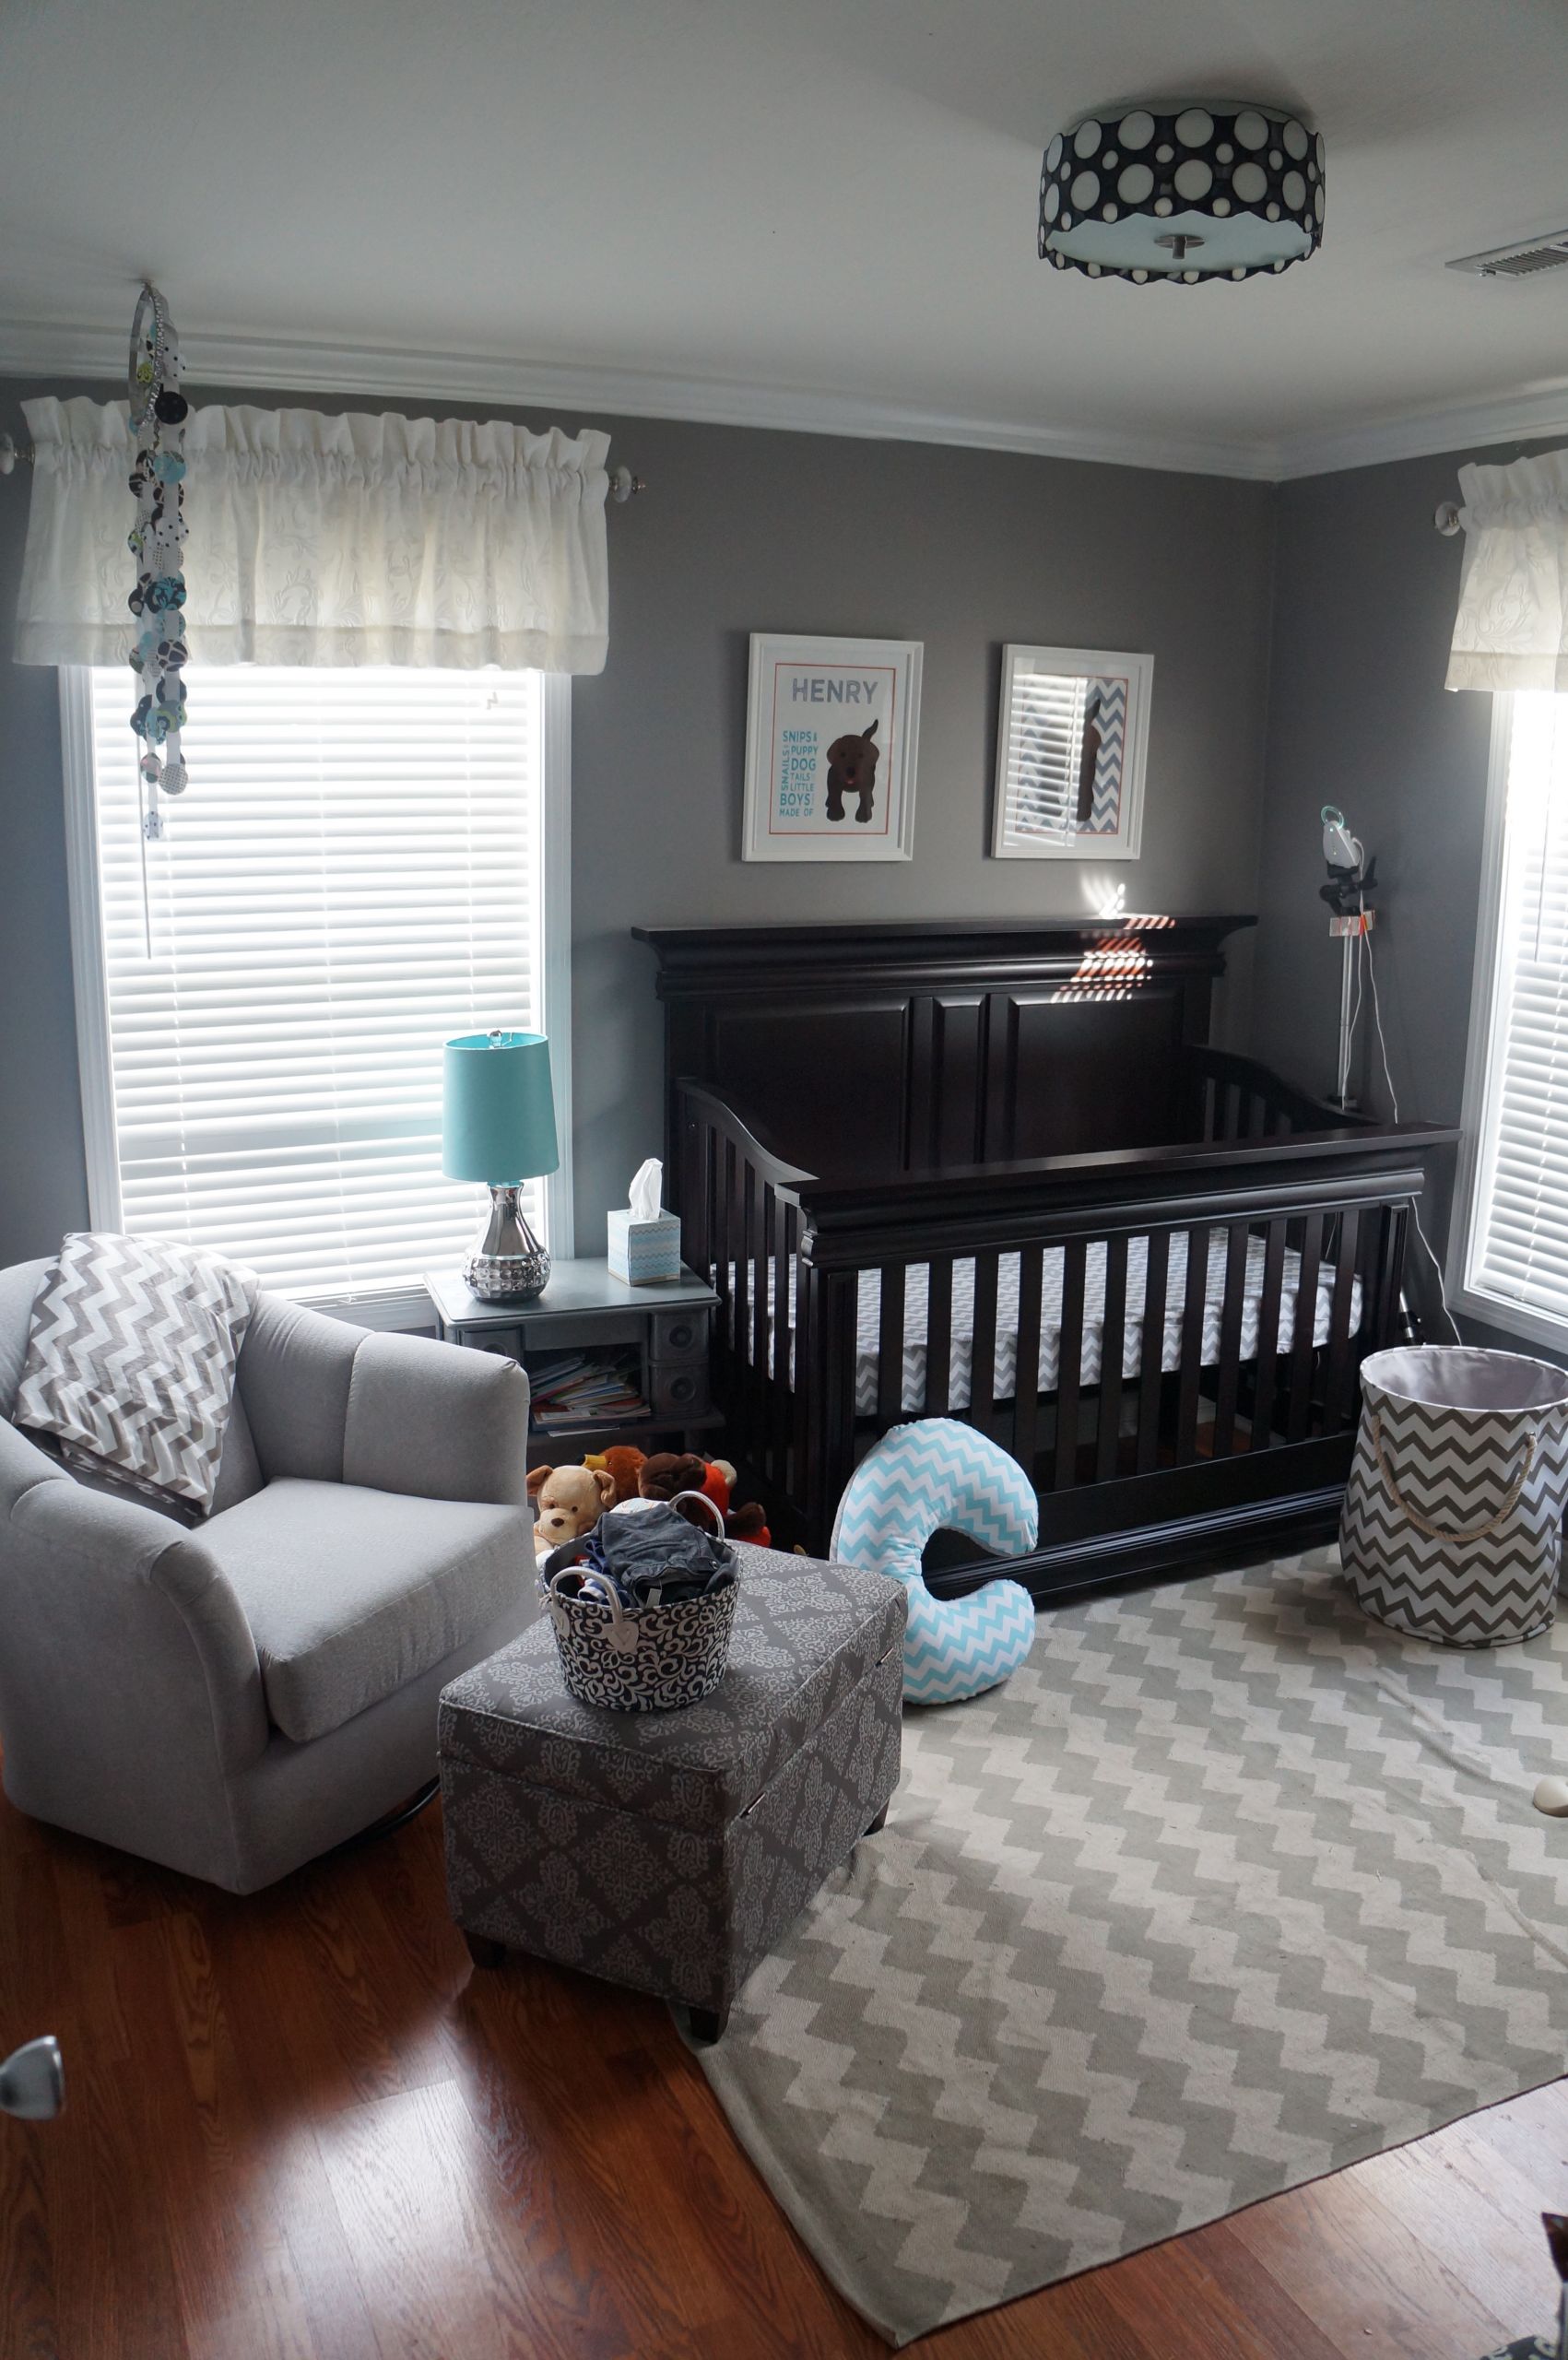 Gray Baby Room Decor
 Henry s Chevron Nursery Project Nursery